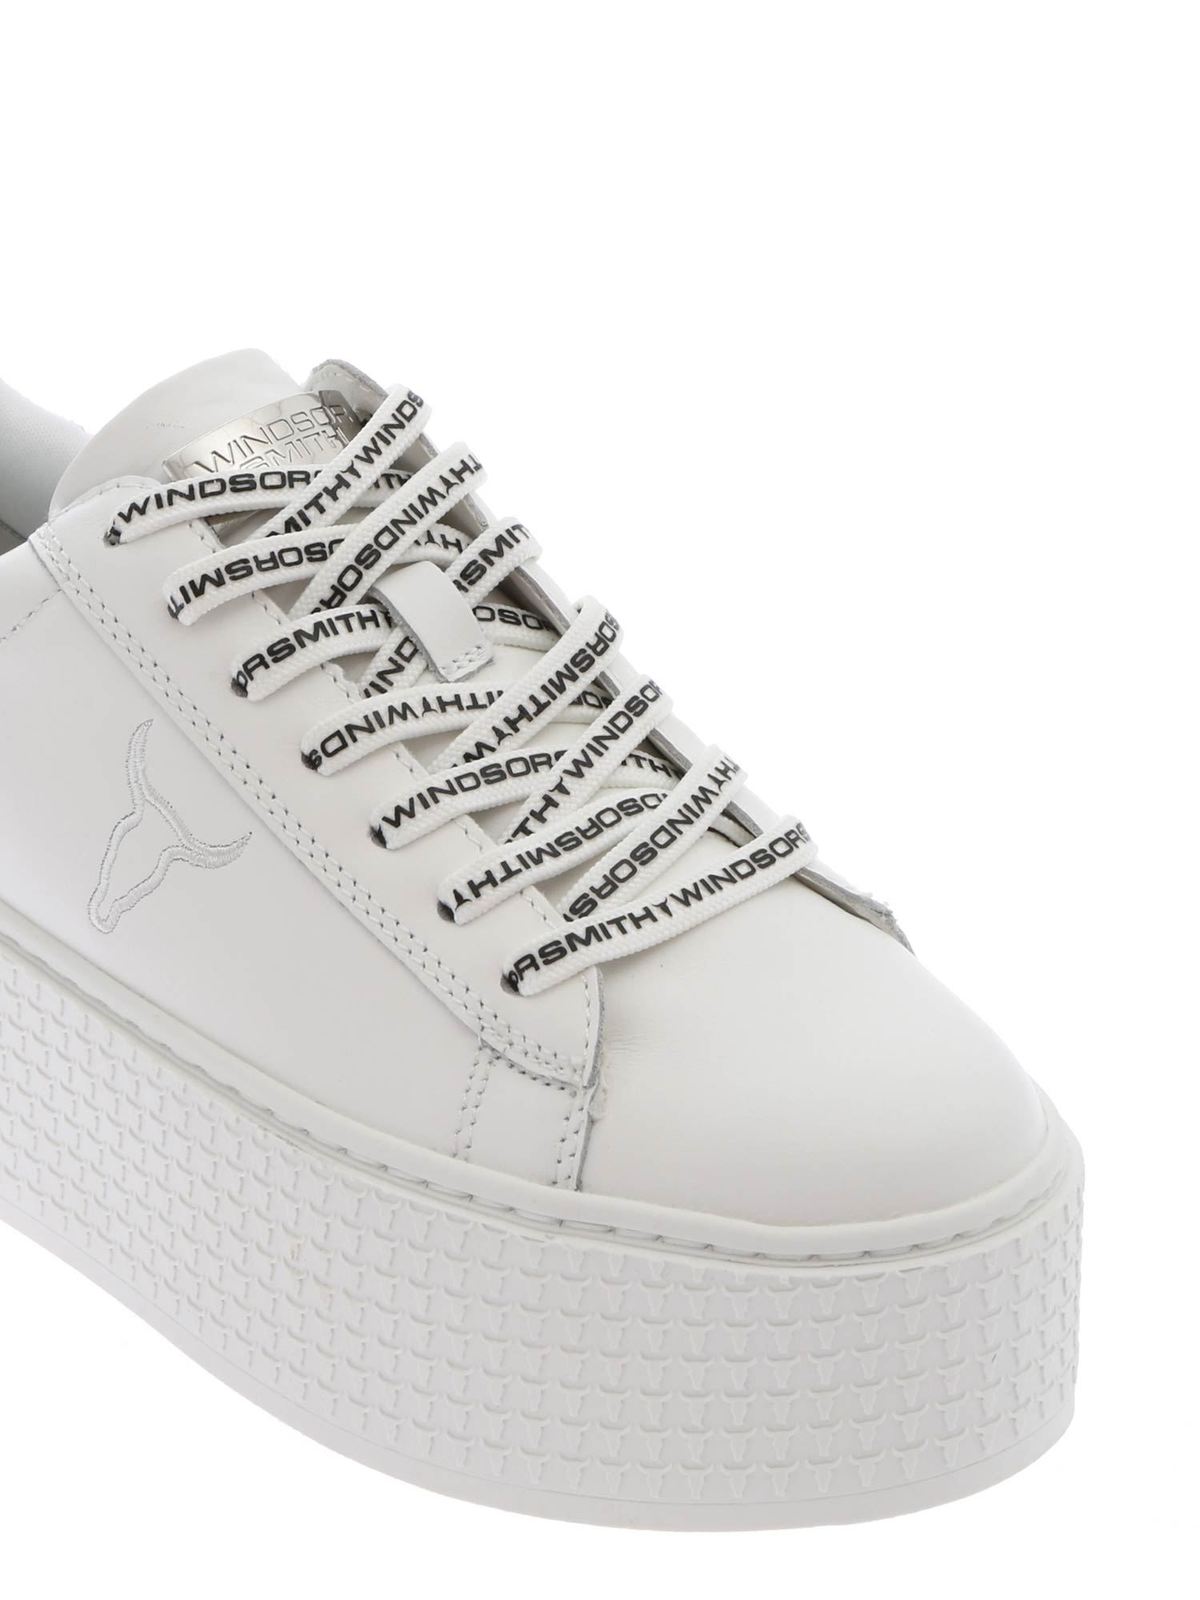 Windsor Smith - White Seoul sneakers 